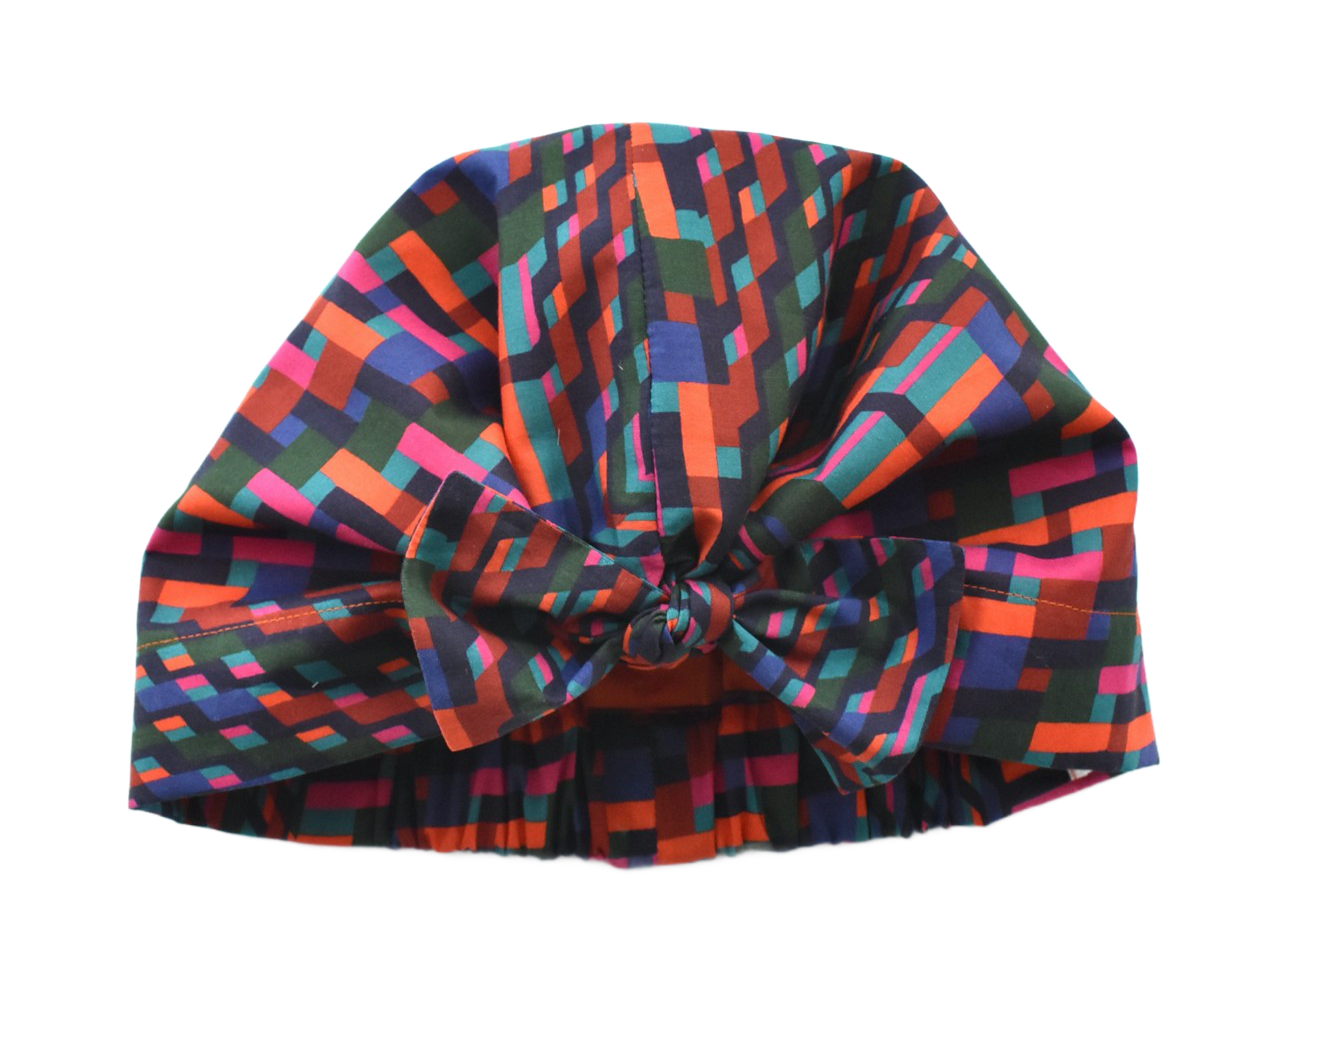 SMALL & cotton lined Turban Hat - Liberty of London Ziggy - Graphic bright print